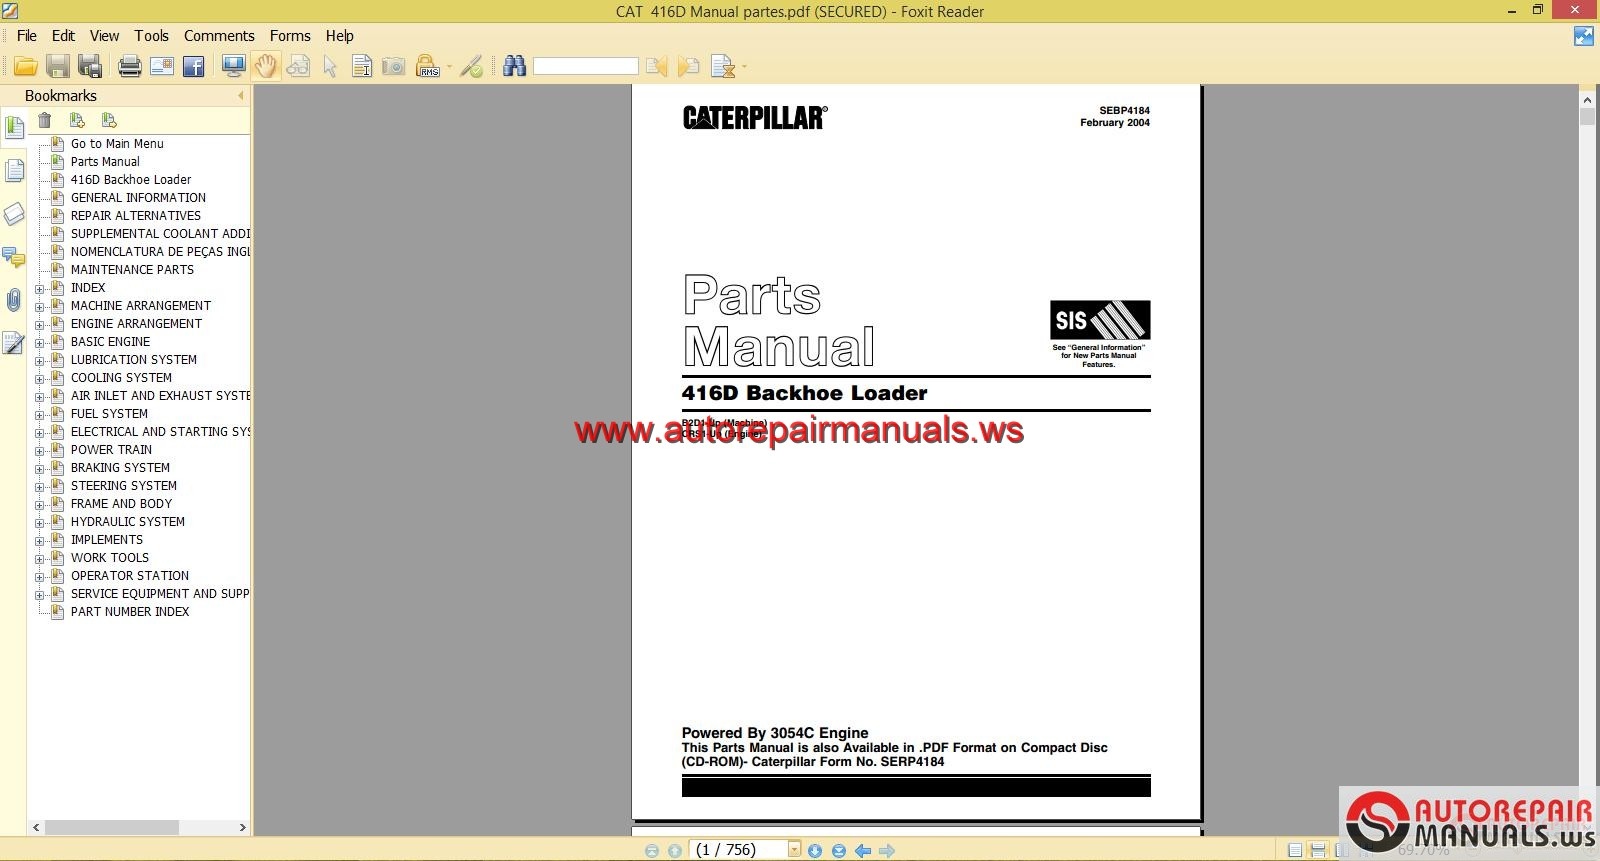 Manual de caterpillar pdf